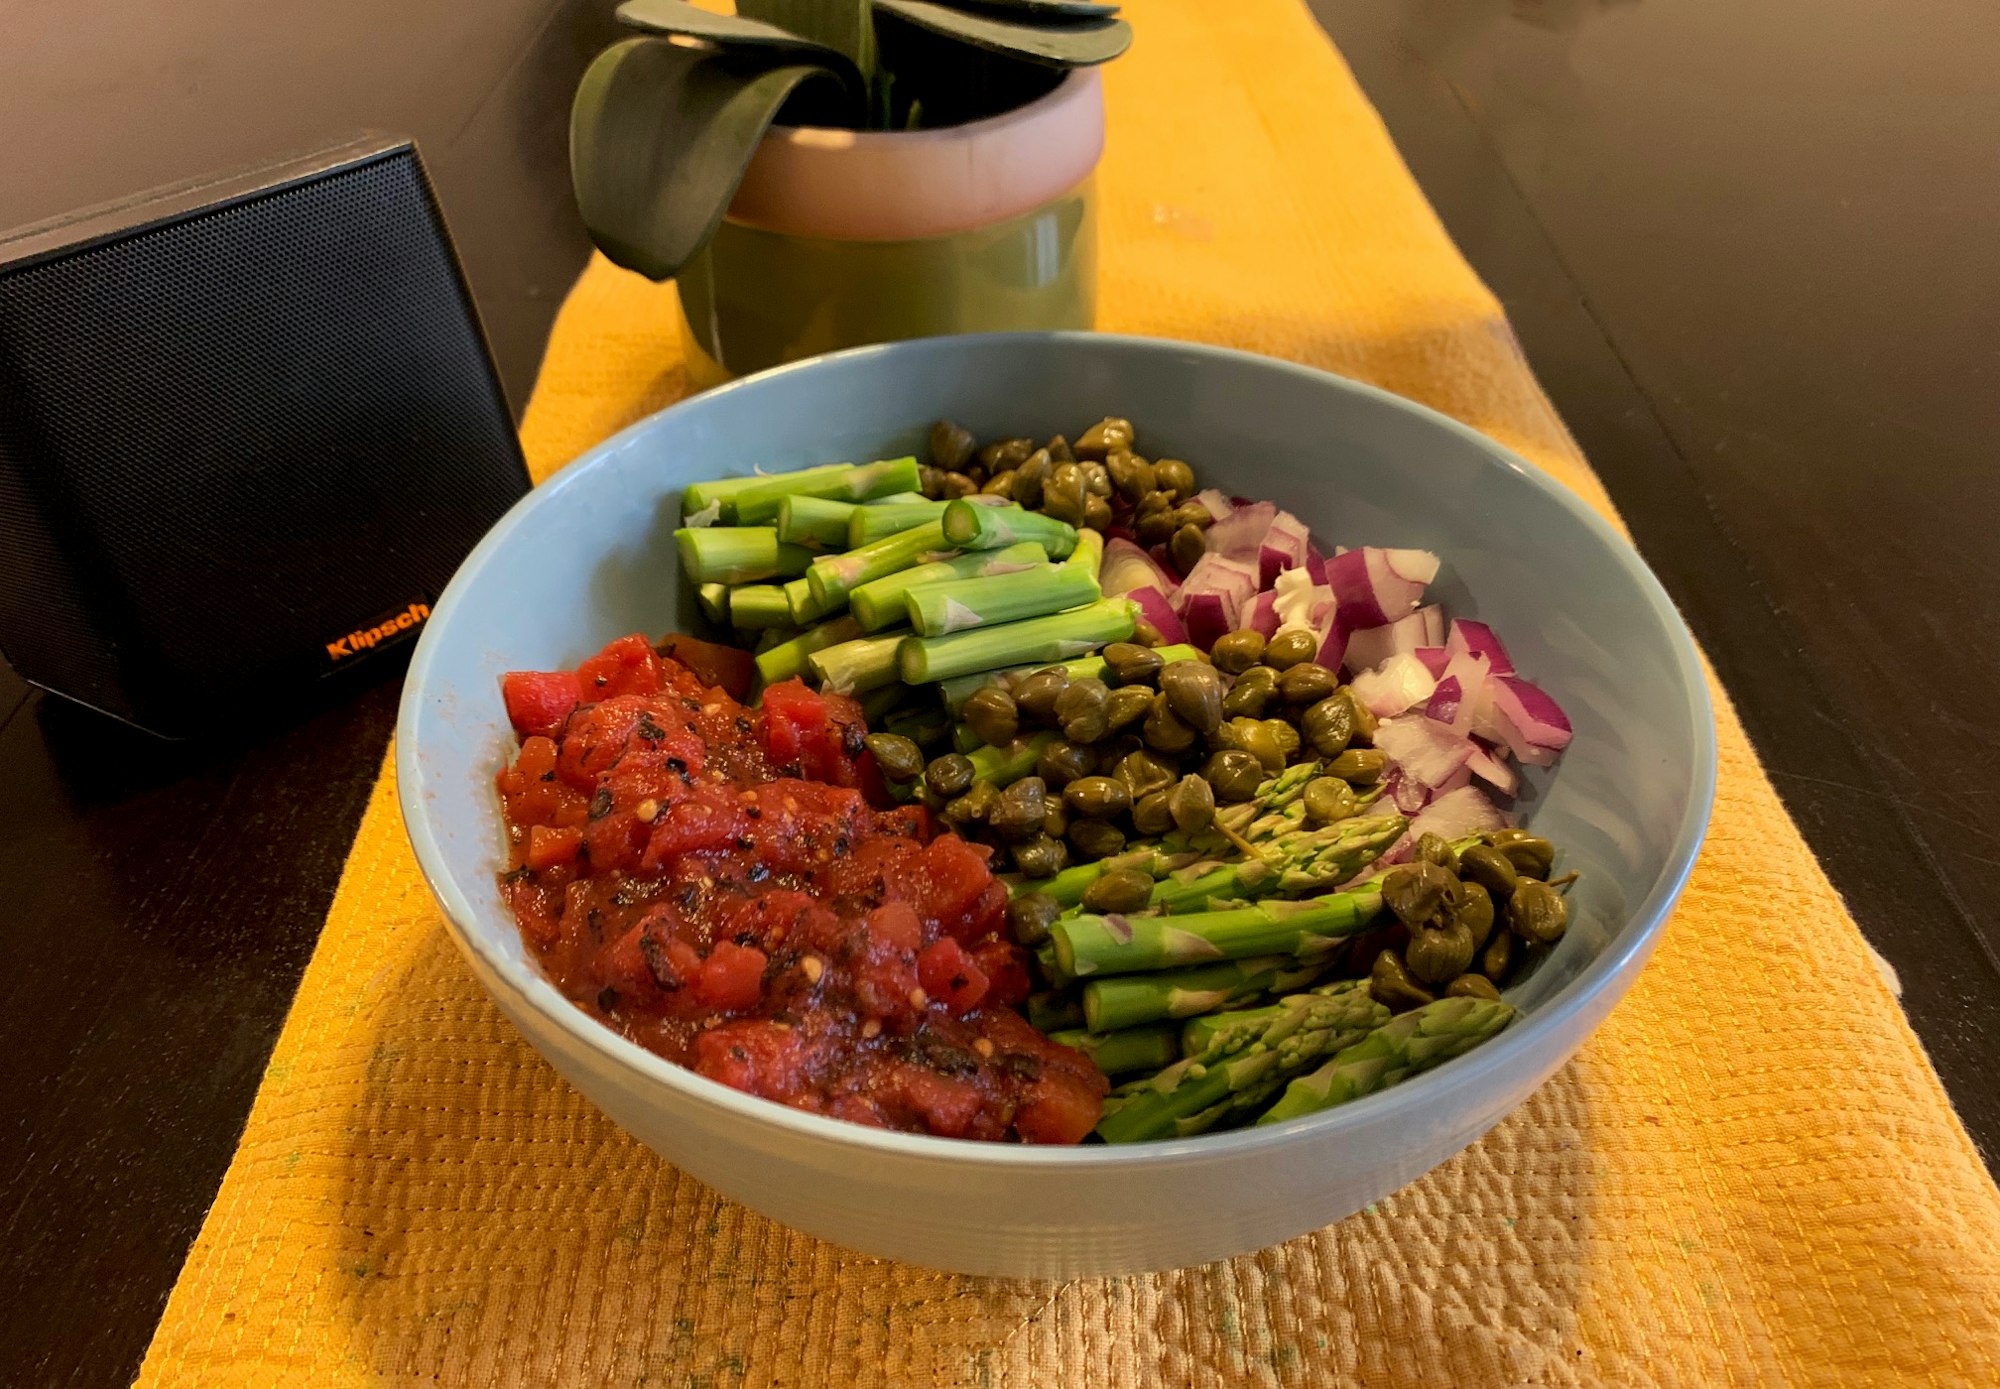 Uncooked veggies table view